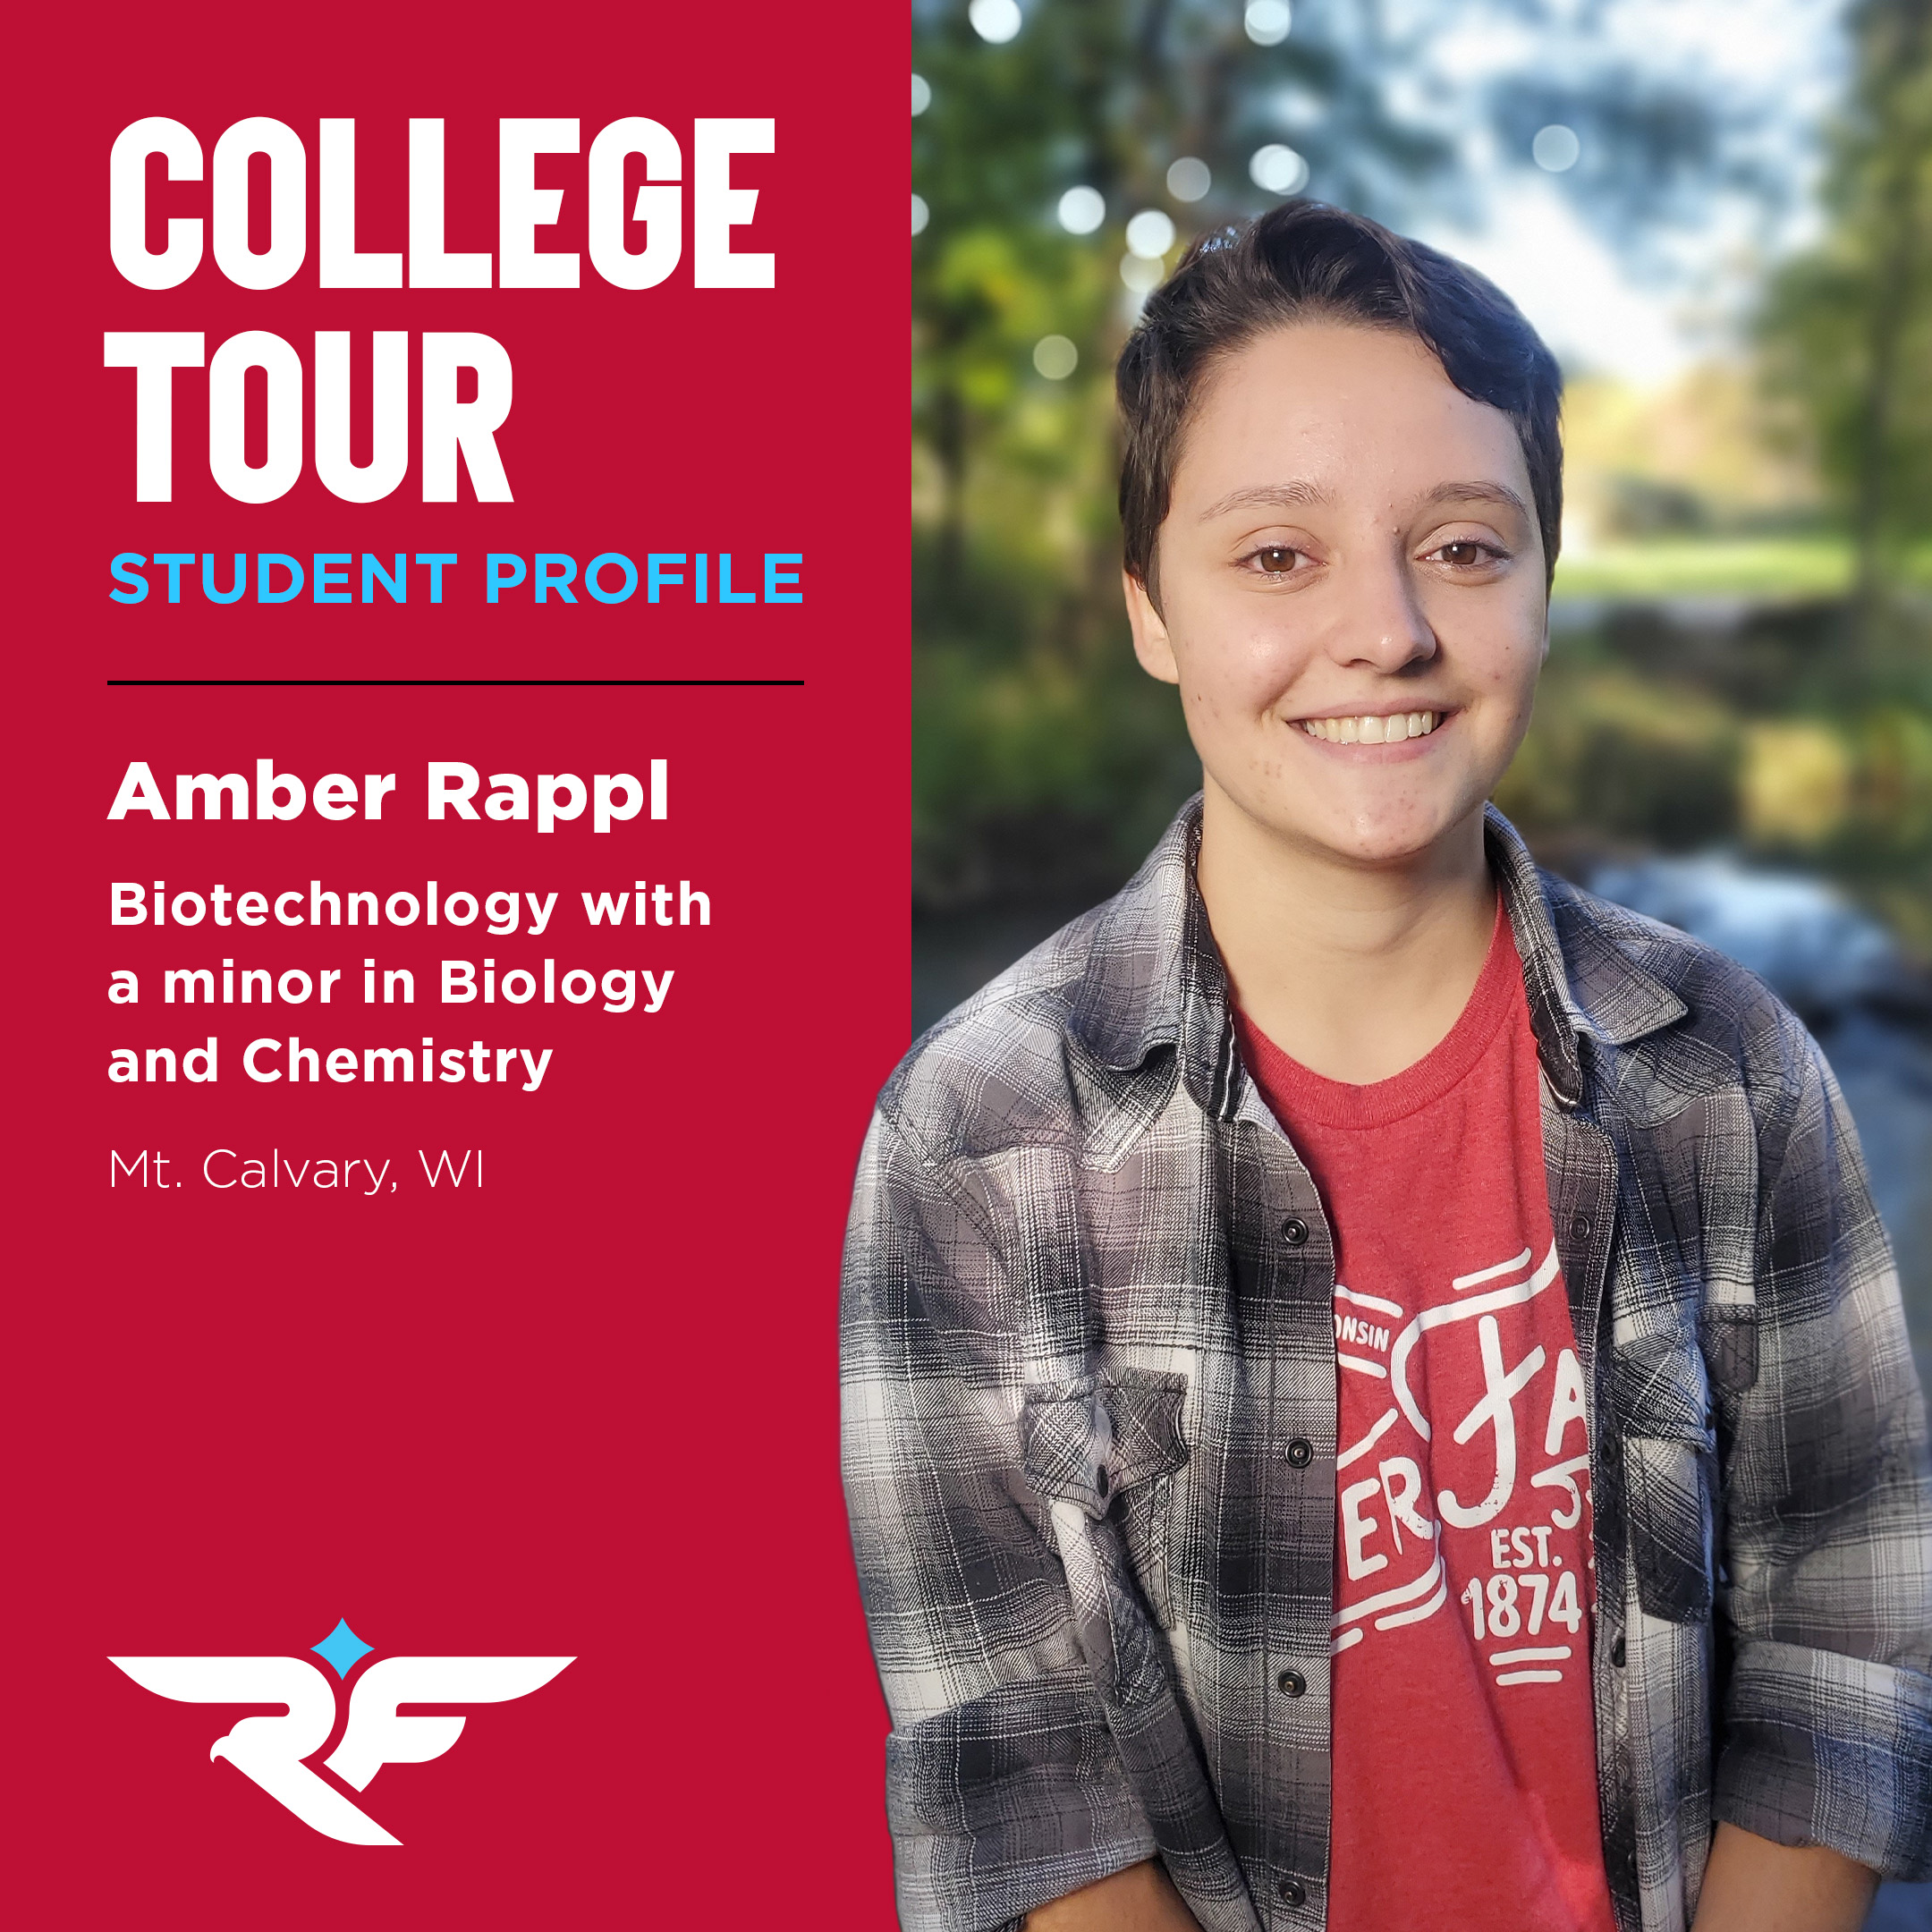 College Tour Amber Rappl